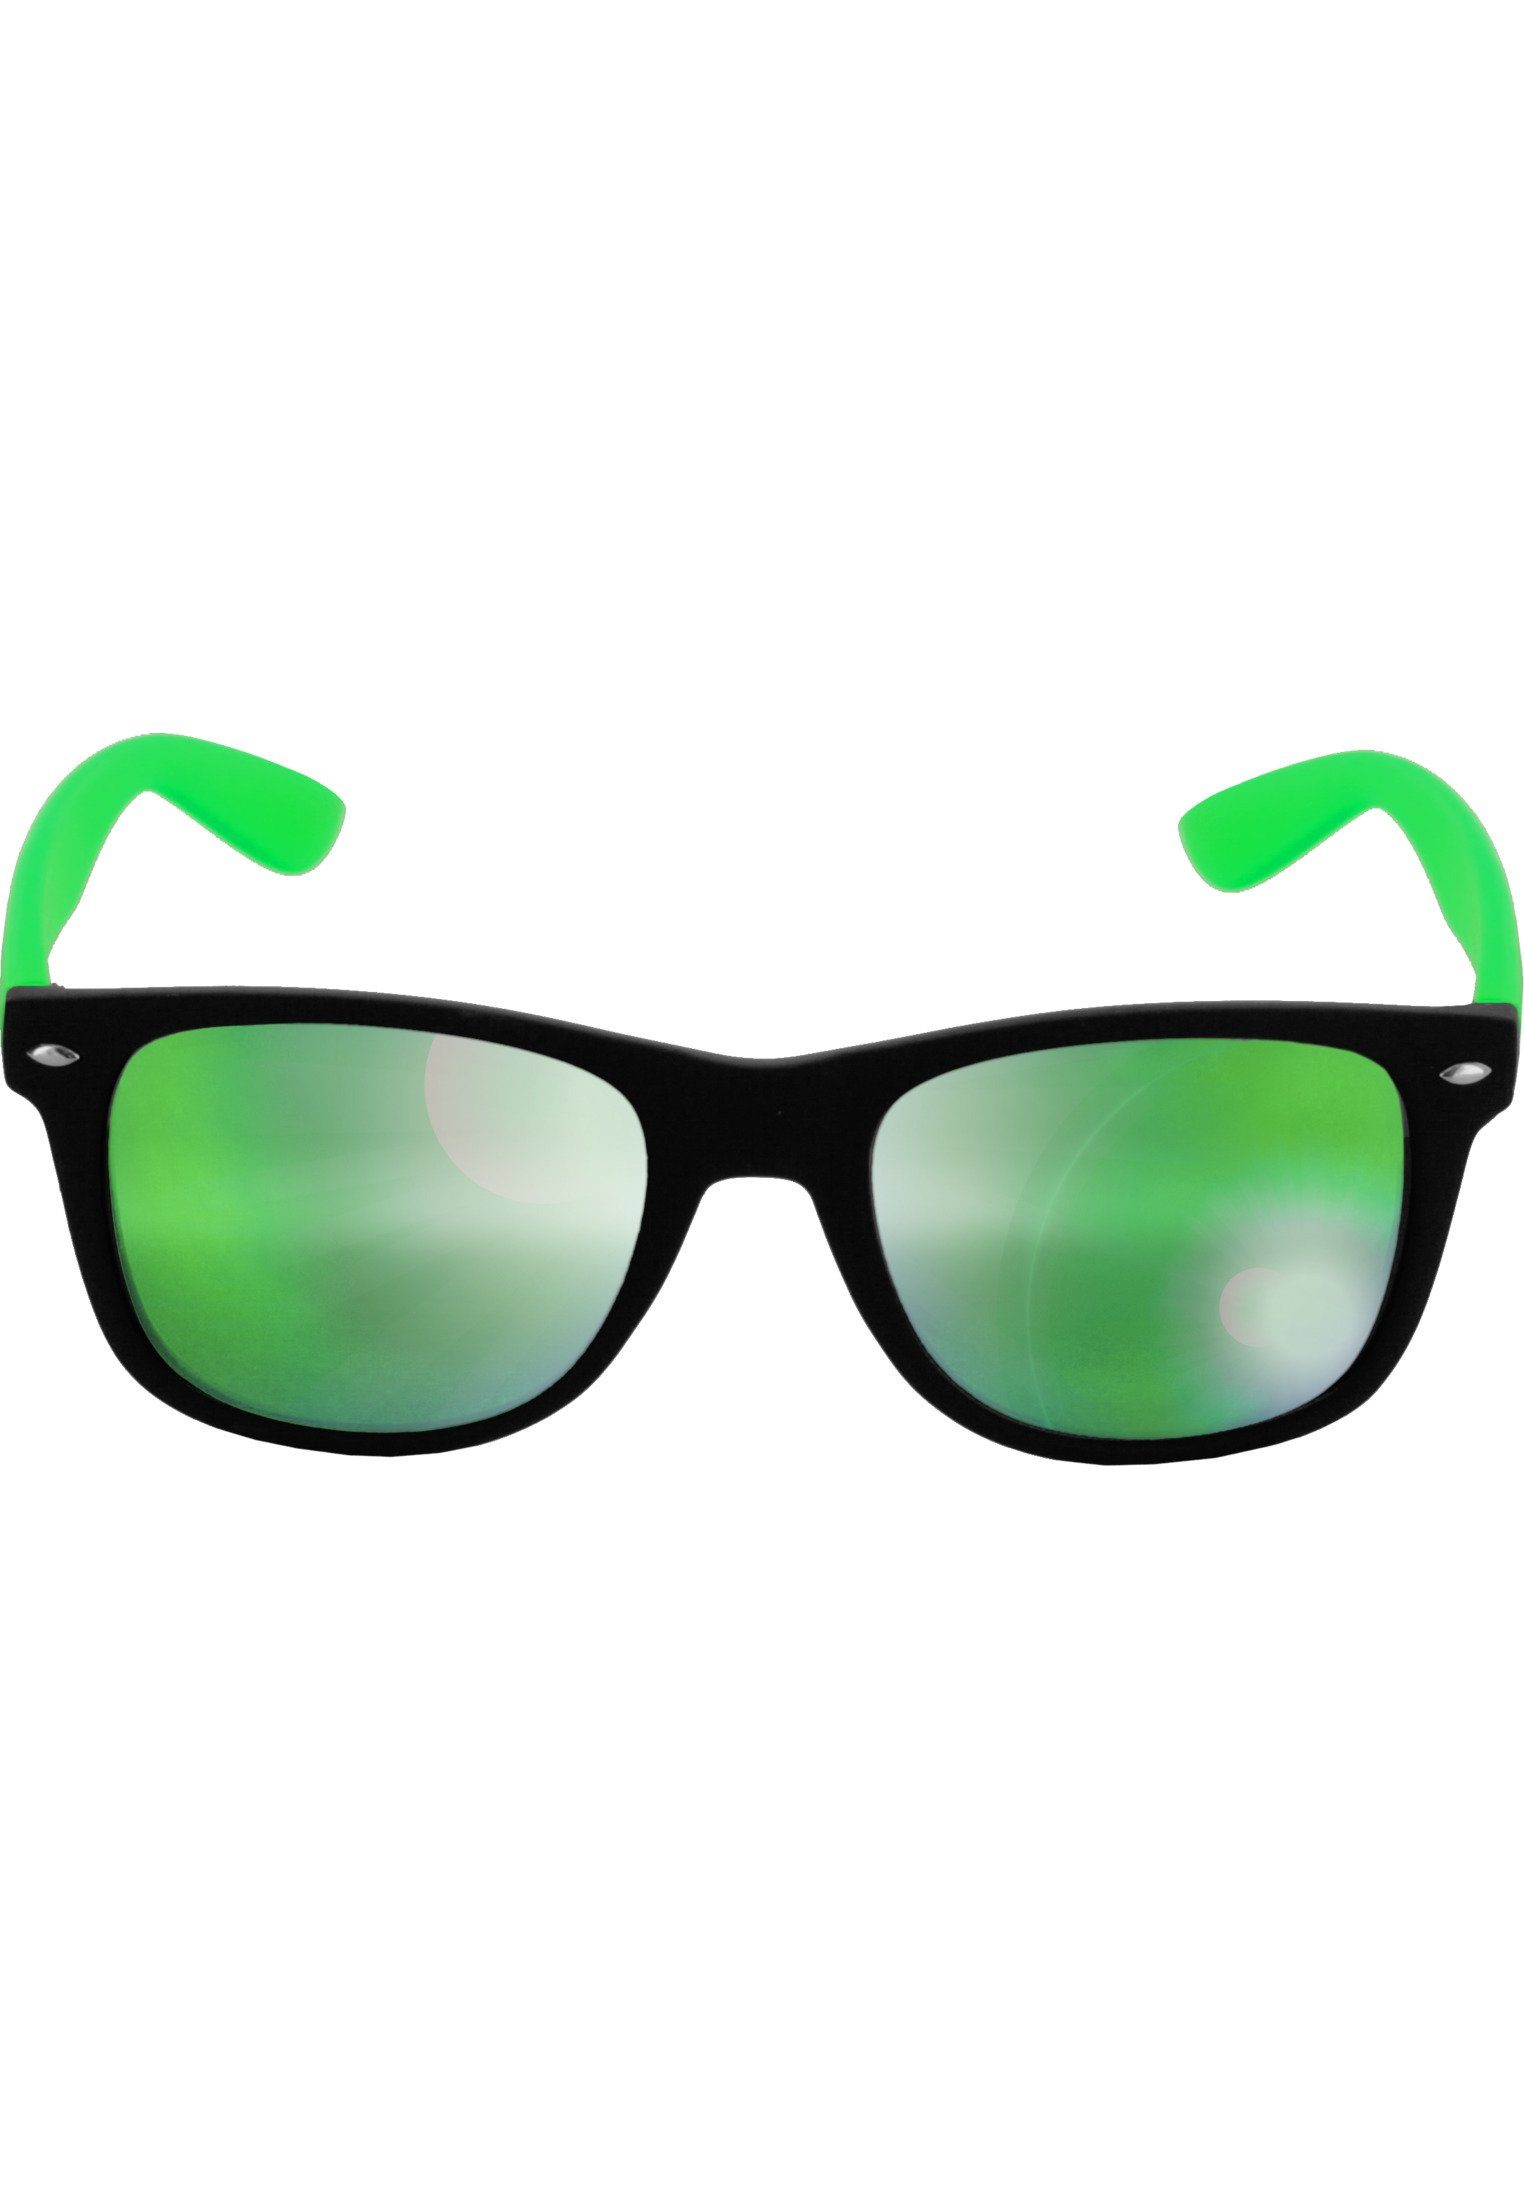 MSTRDS blk/lgr Sonnenbrille Mirror Likoma Accessoires Sunglasses